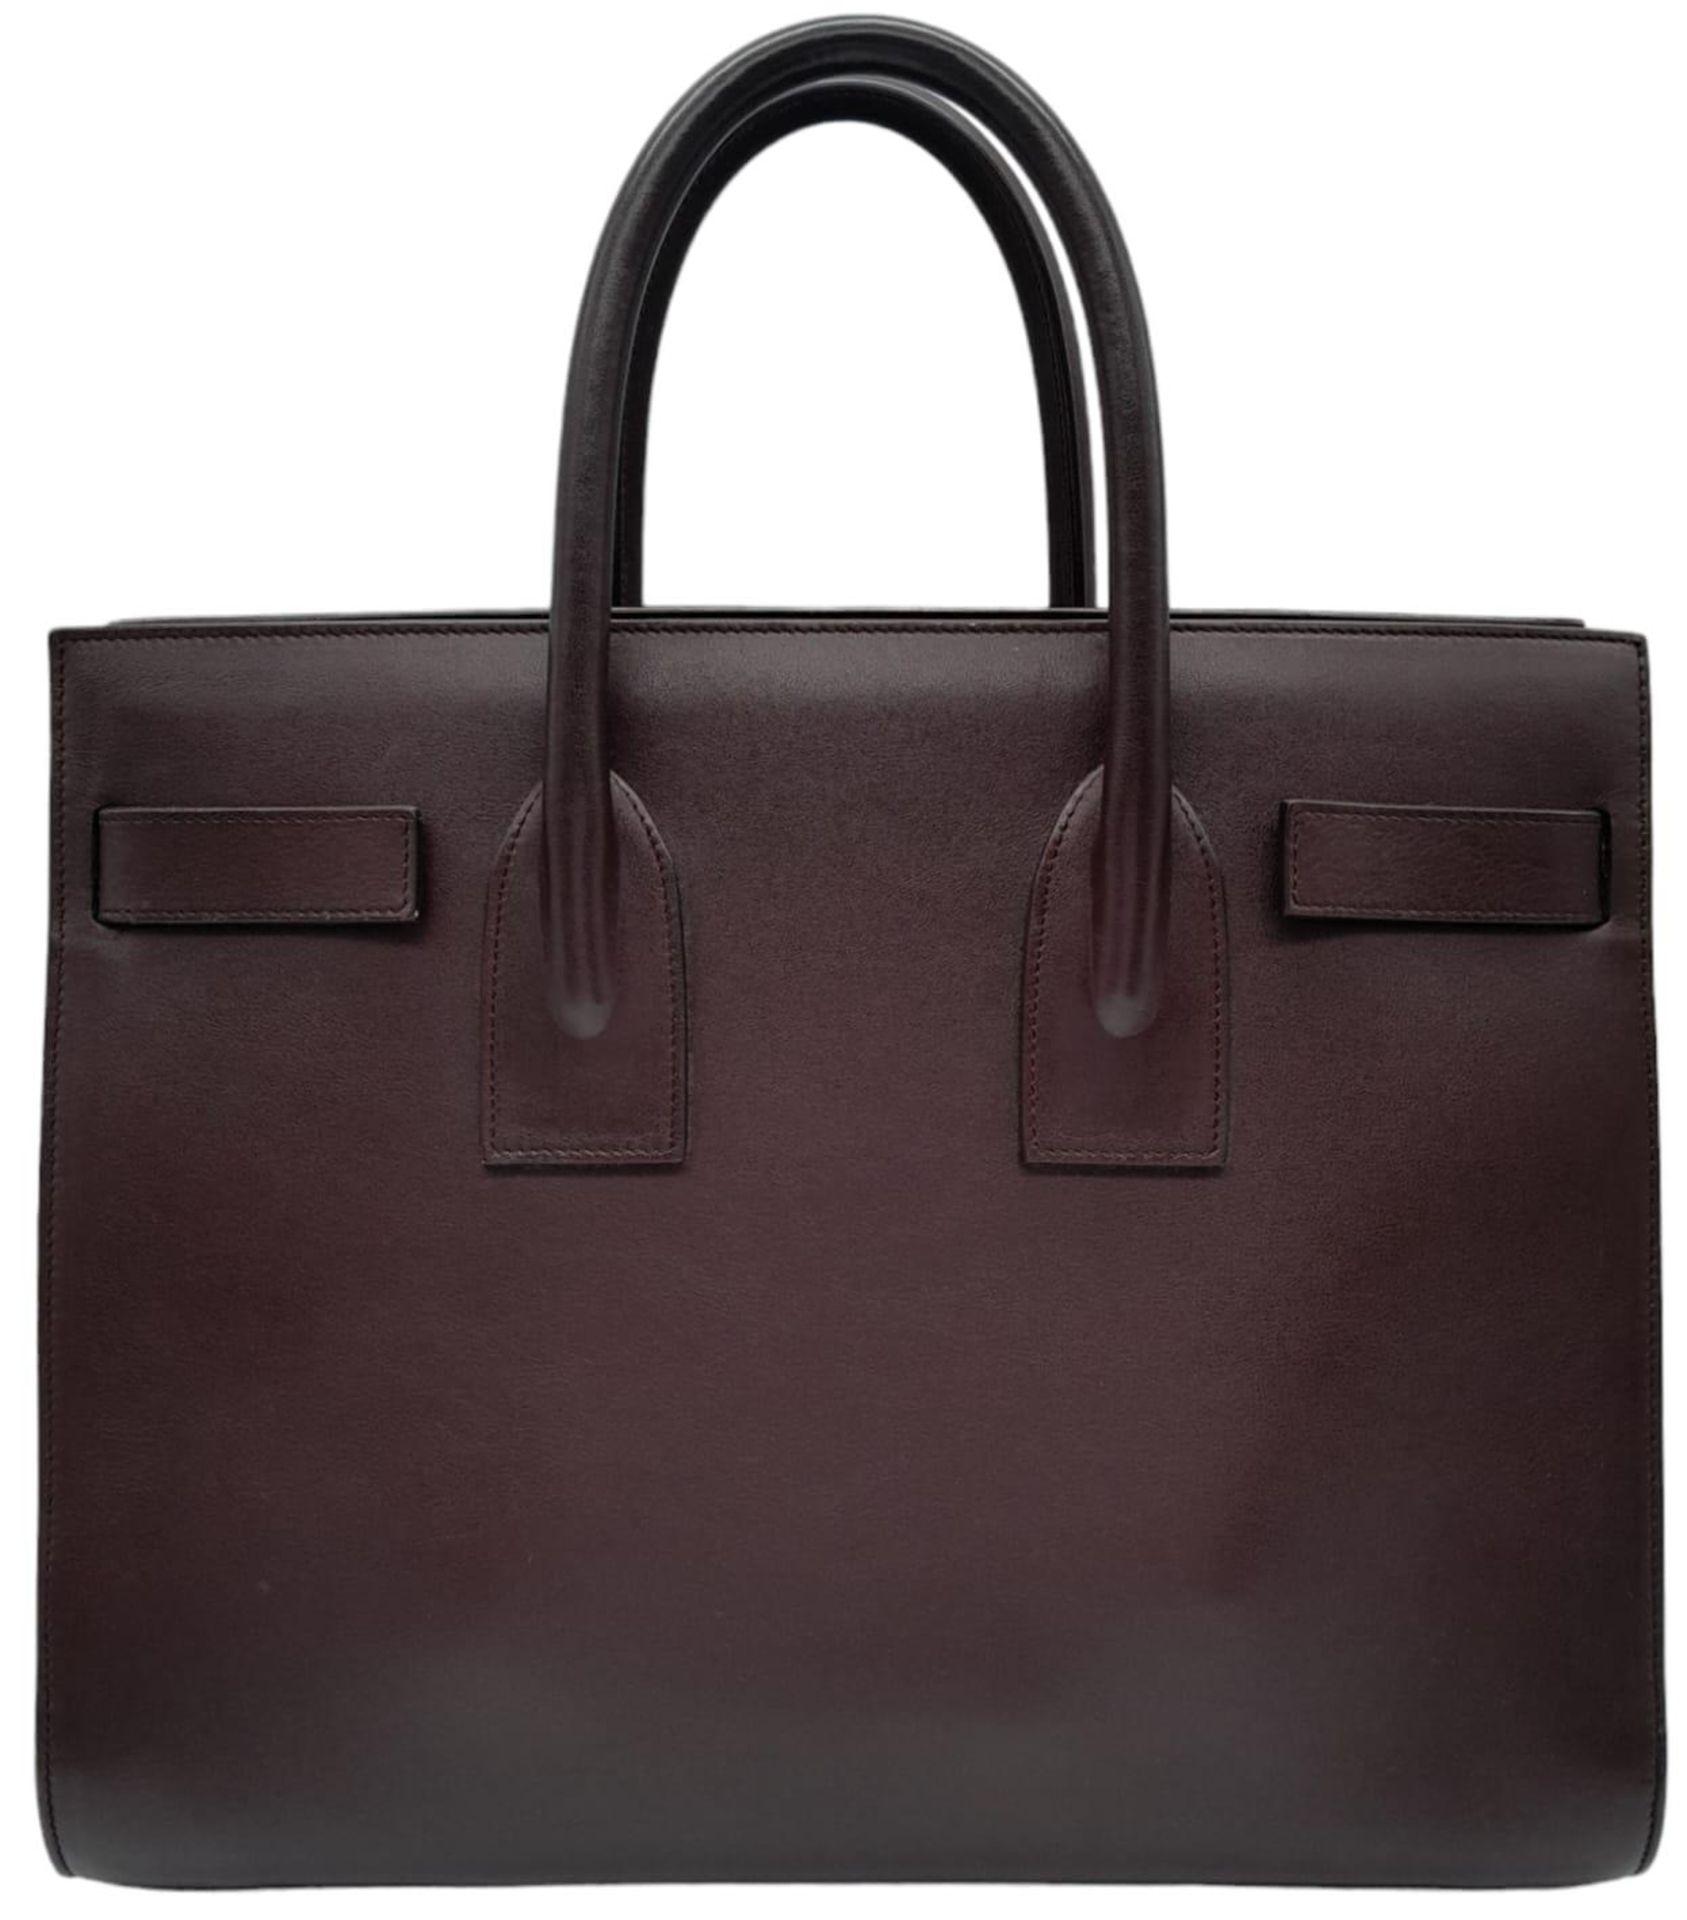 A Saint Laurent Sac De Jour Burgundy Handbag. Leather Exterior, Gold Tone Hardware, Double Handle in - Image 5 of 11